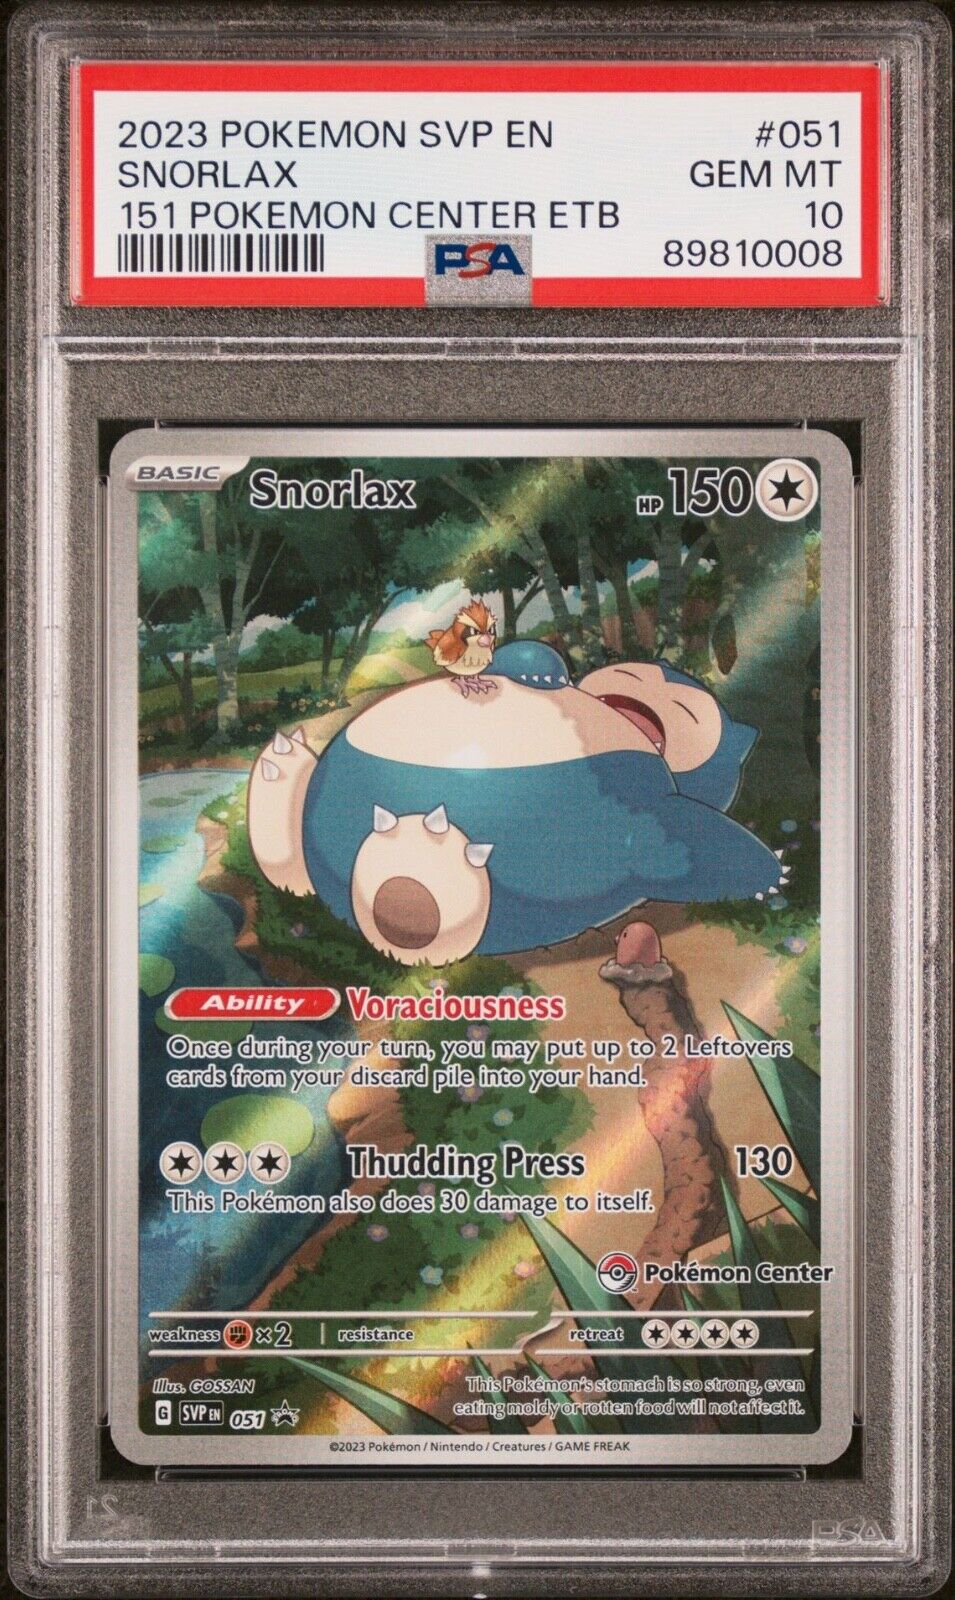 PSA 10 - Pokemon Center Stamped SVP 051 Snorlax - 151 ETB Promo - Gem Mint 10